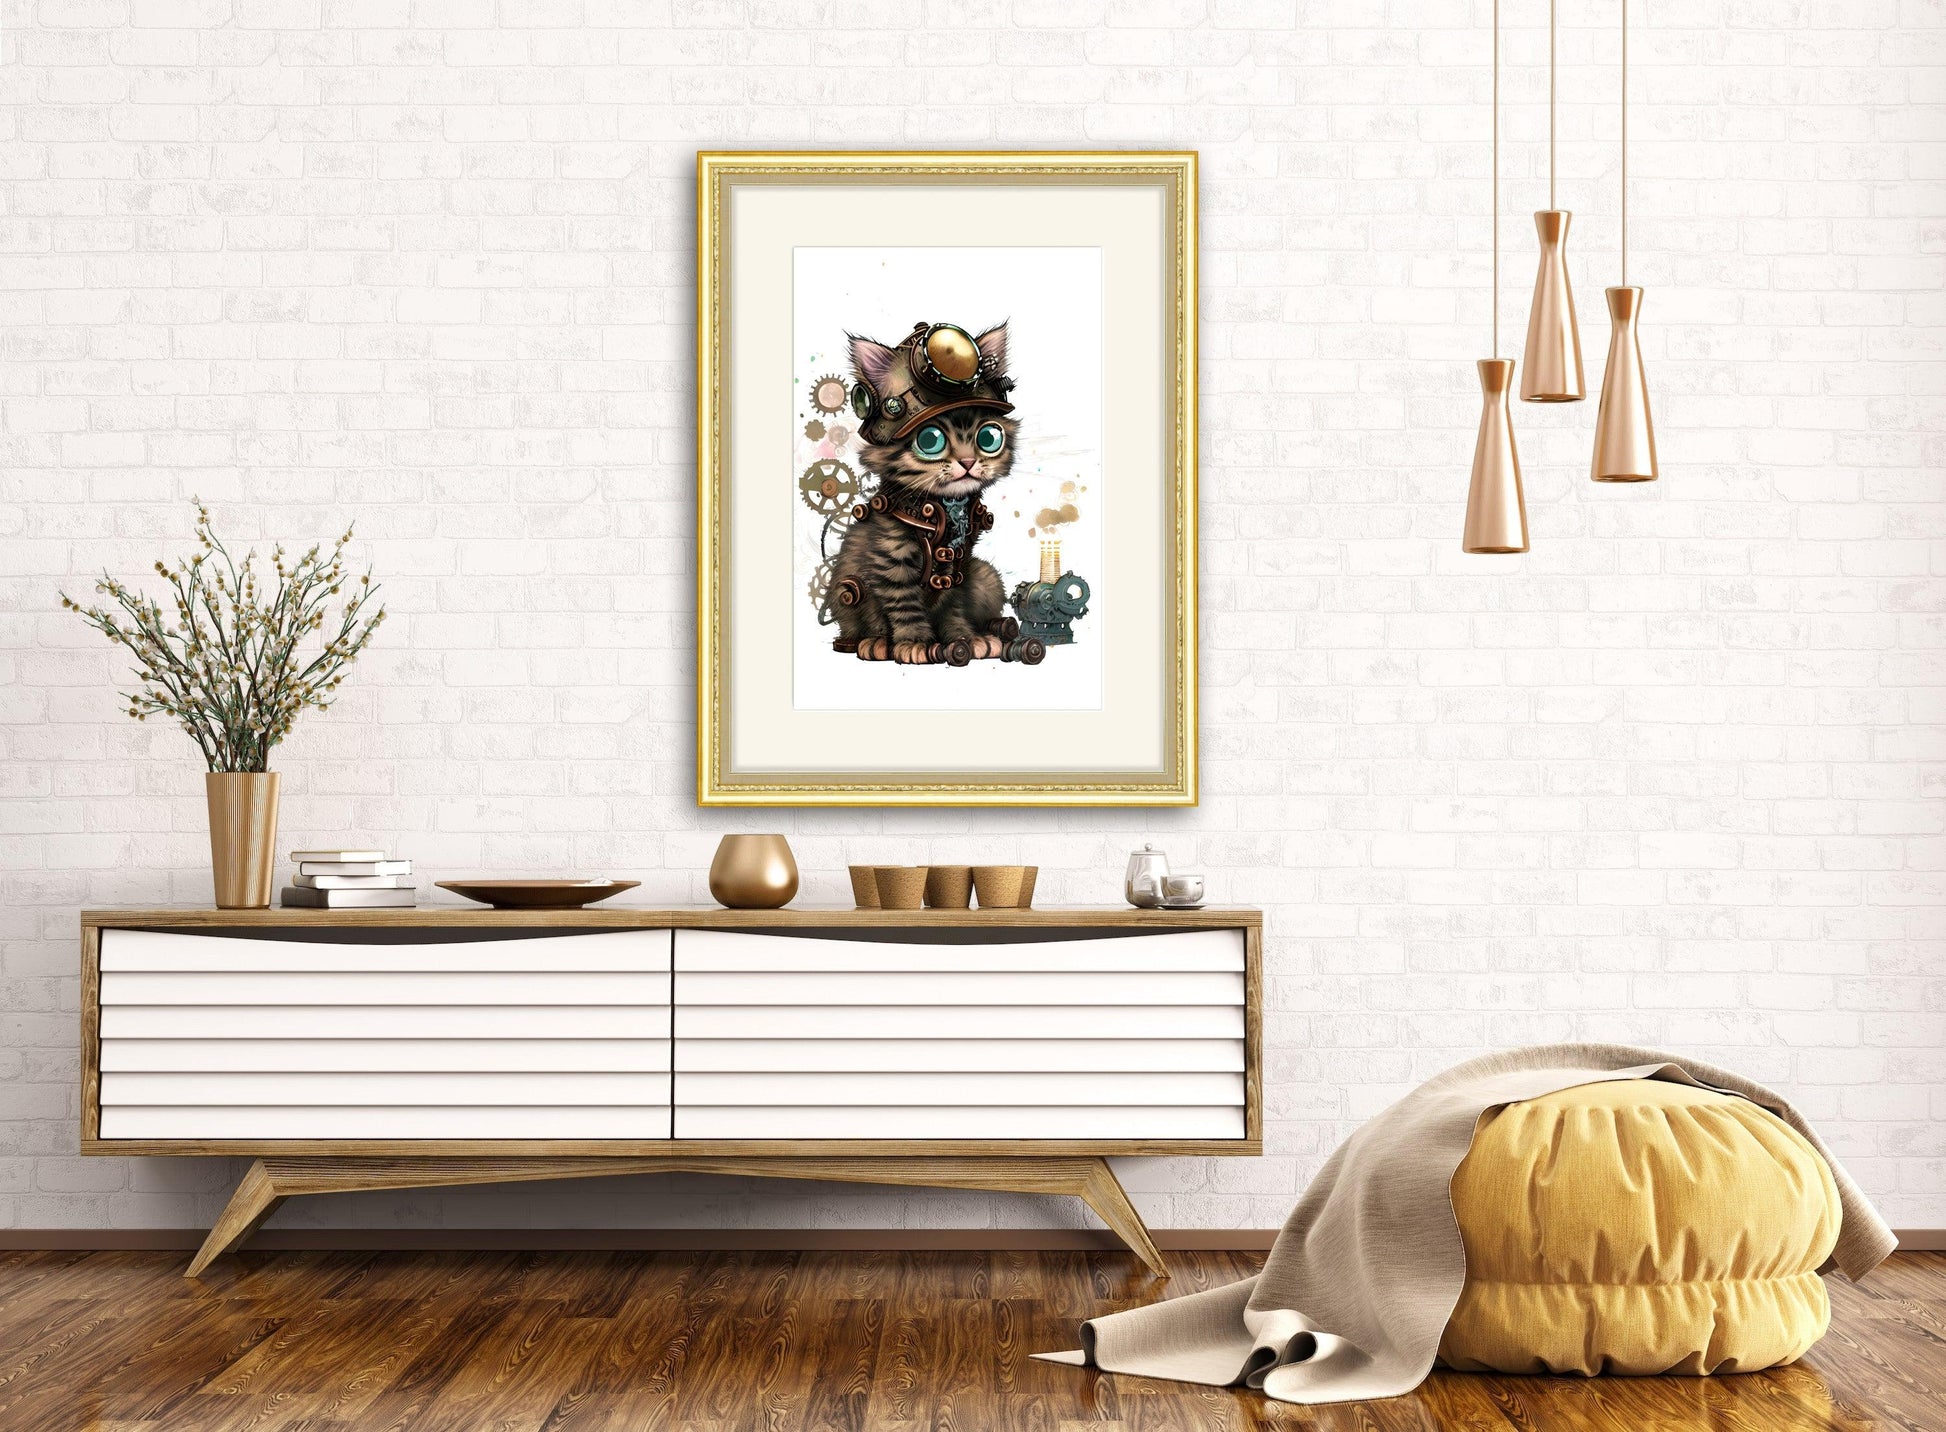 Coghearted Kitten - Steampunk Dictionary Art Print, Fine Art Print, Funny Animal, Perfect Gift - ArtCursor